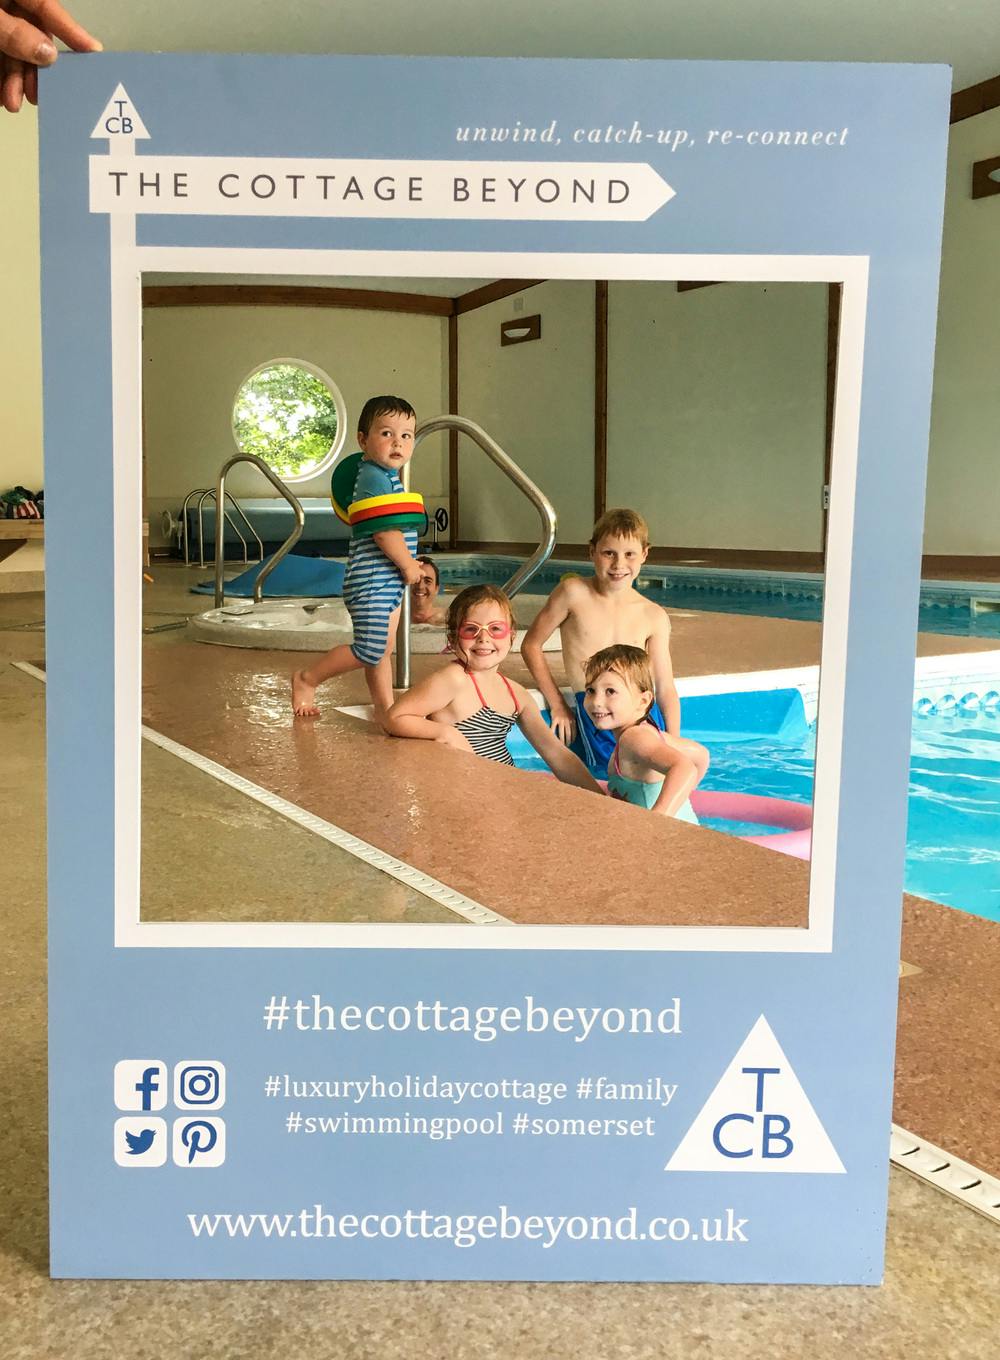 TCB's selfie board in the swimming pool